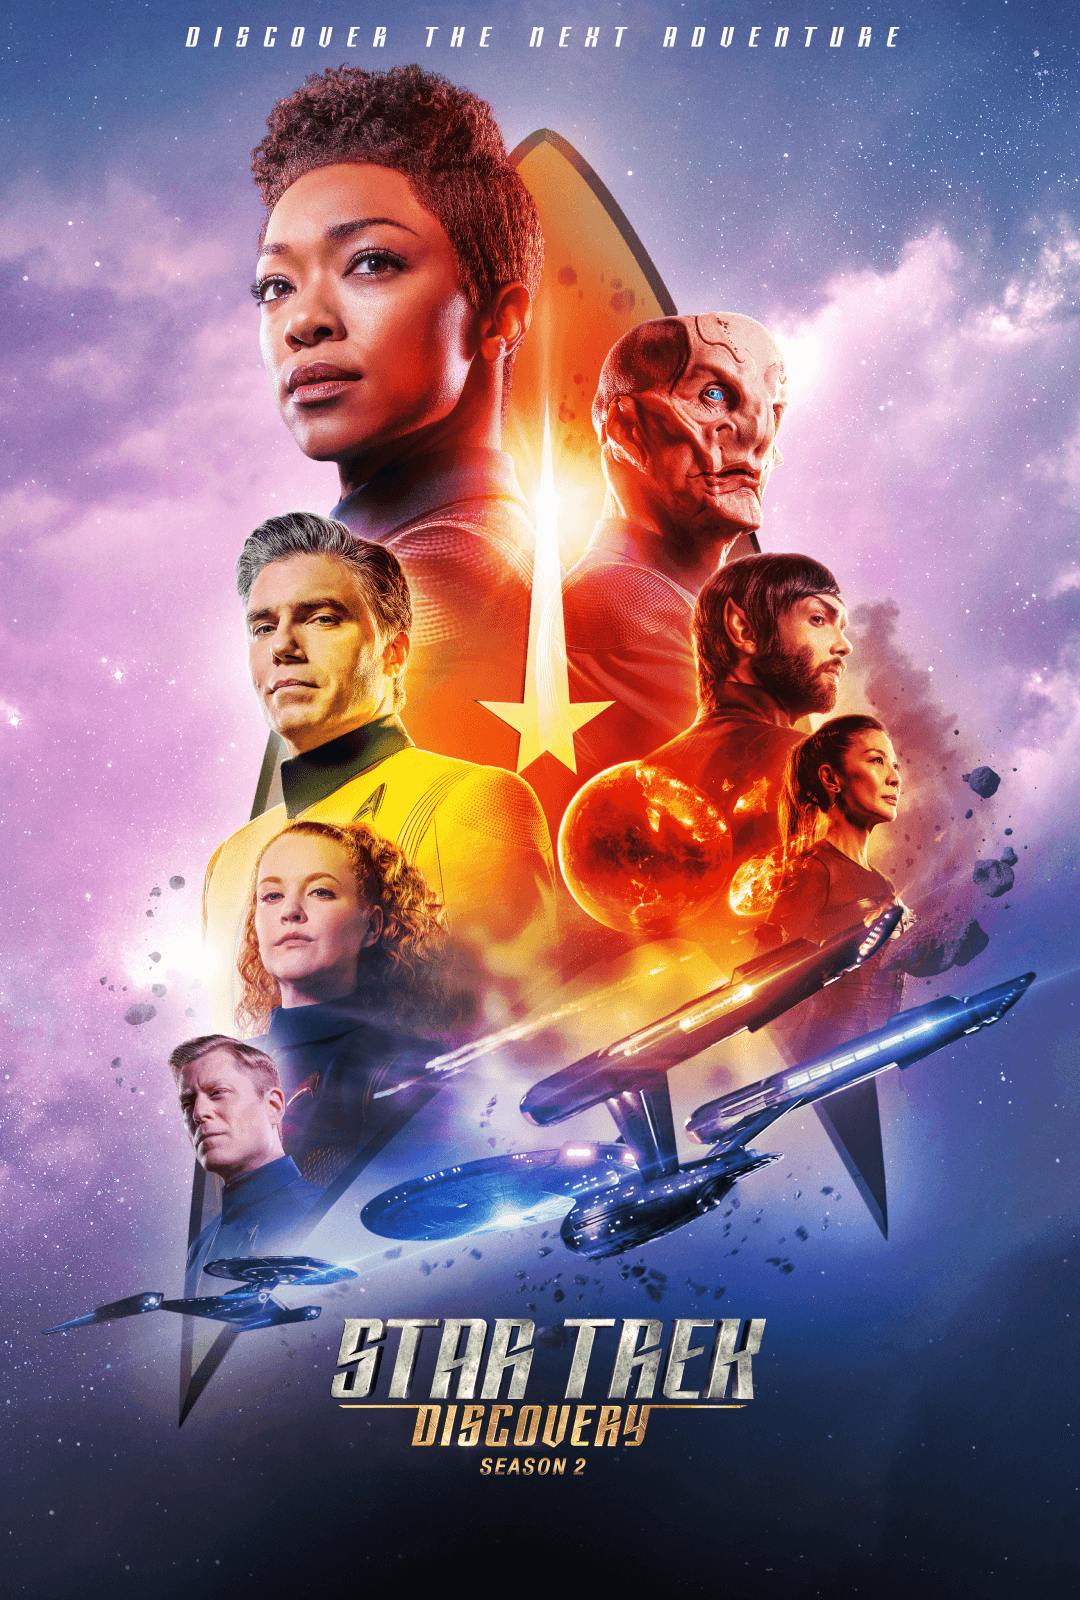 Key art for Star Trek: Discovery Season 2